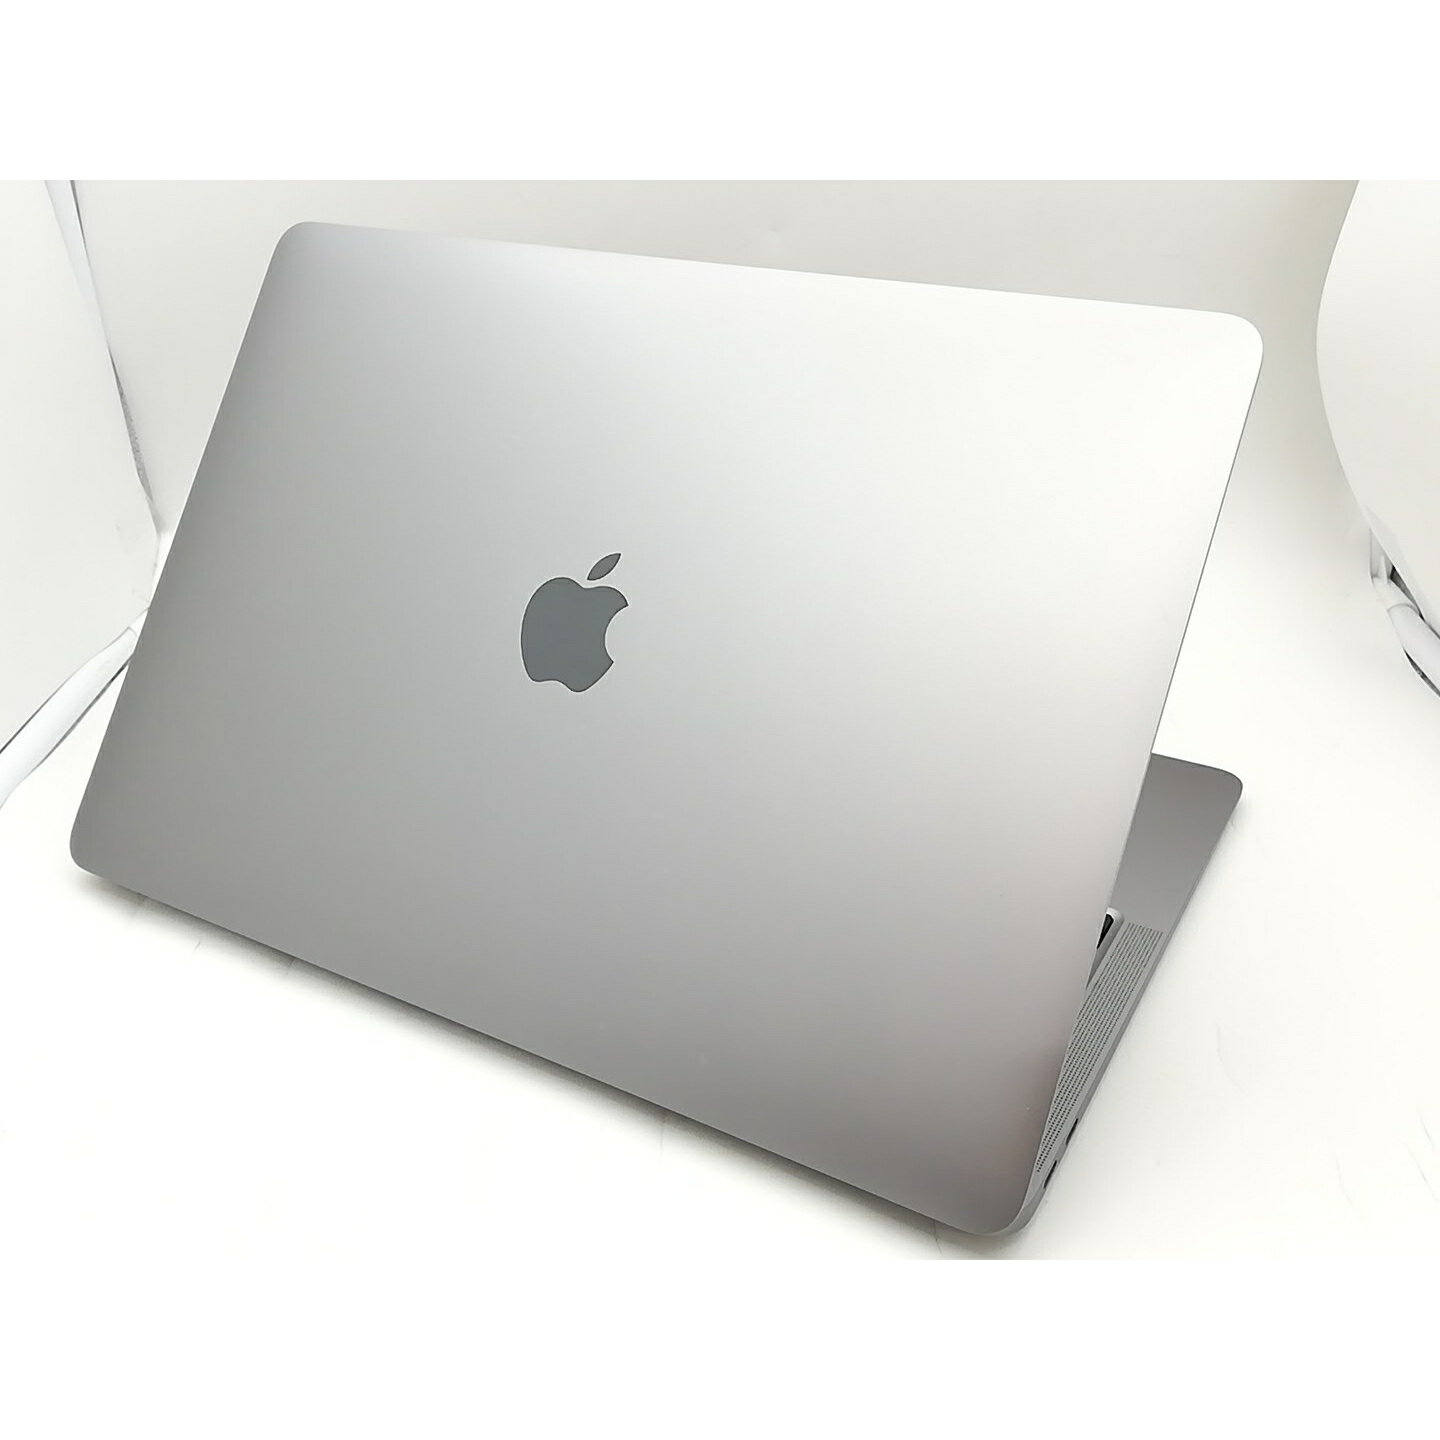 【中古】Apple MacBook Air 